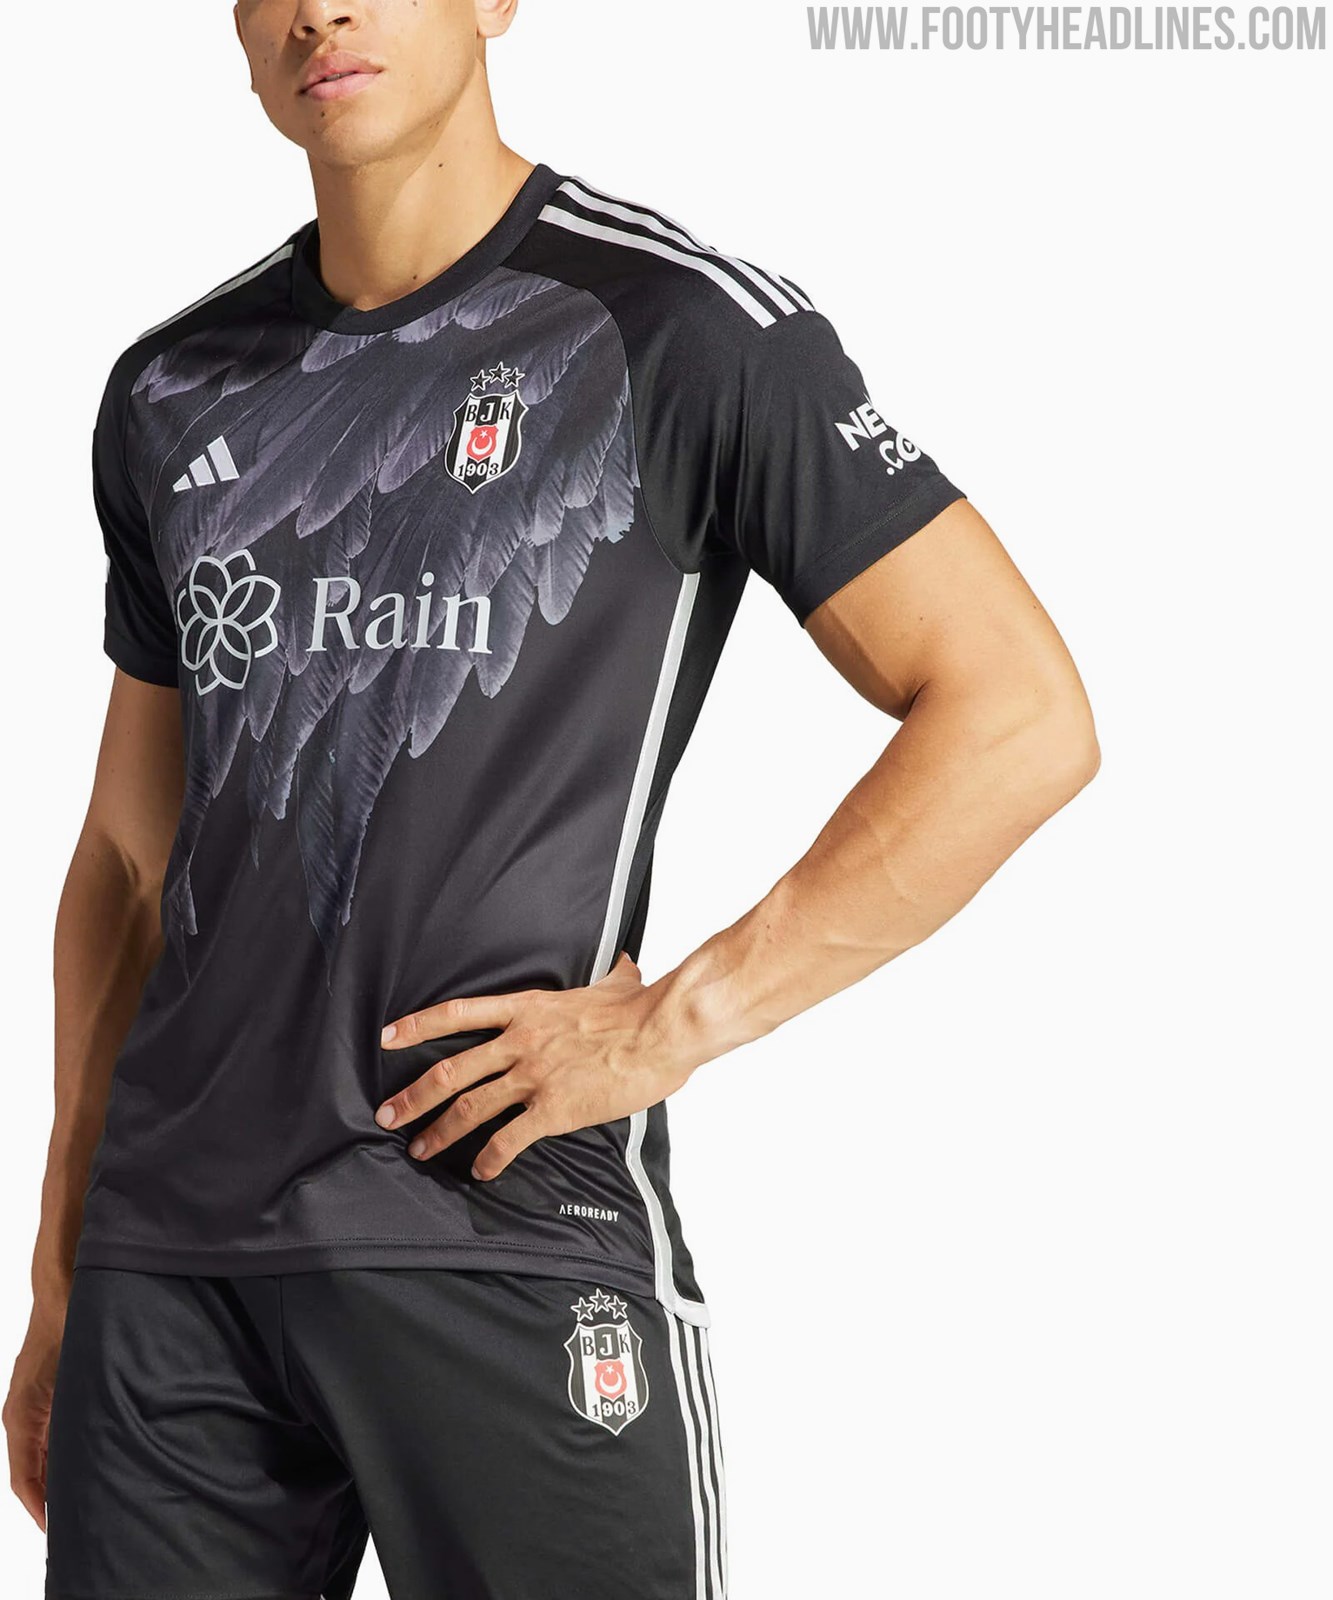 2023–24 Beşiktaş J.K. season - Wikipedia